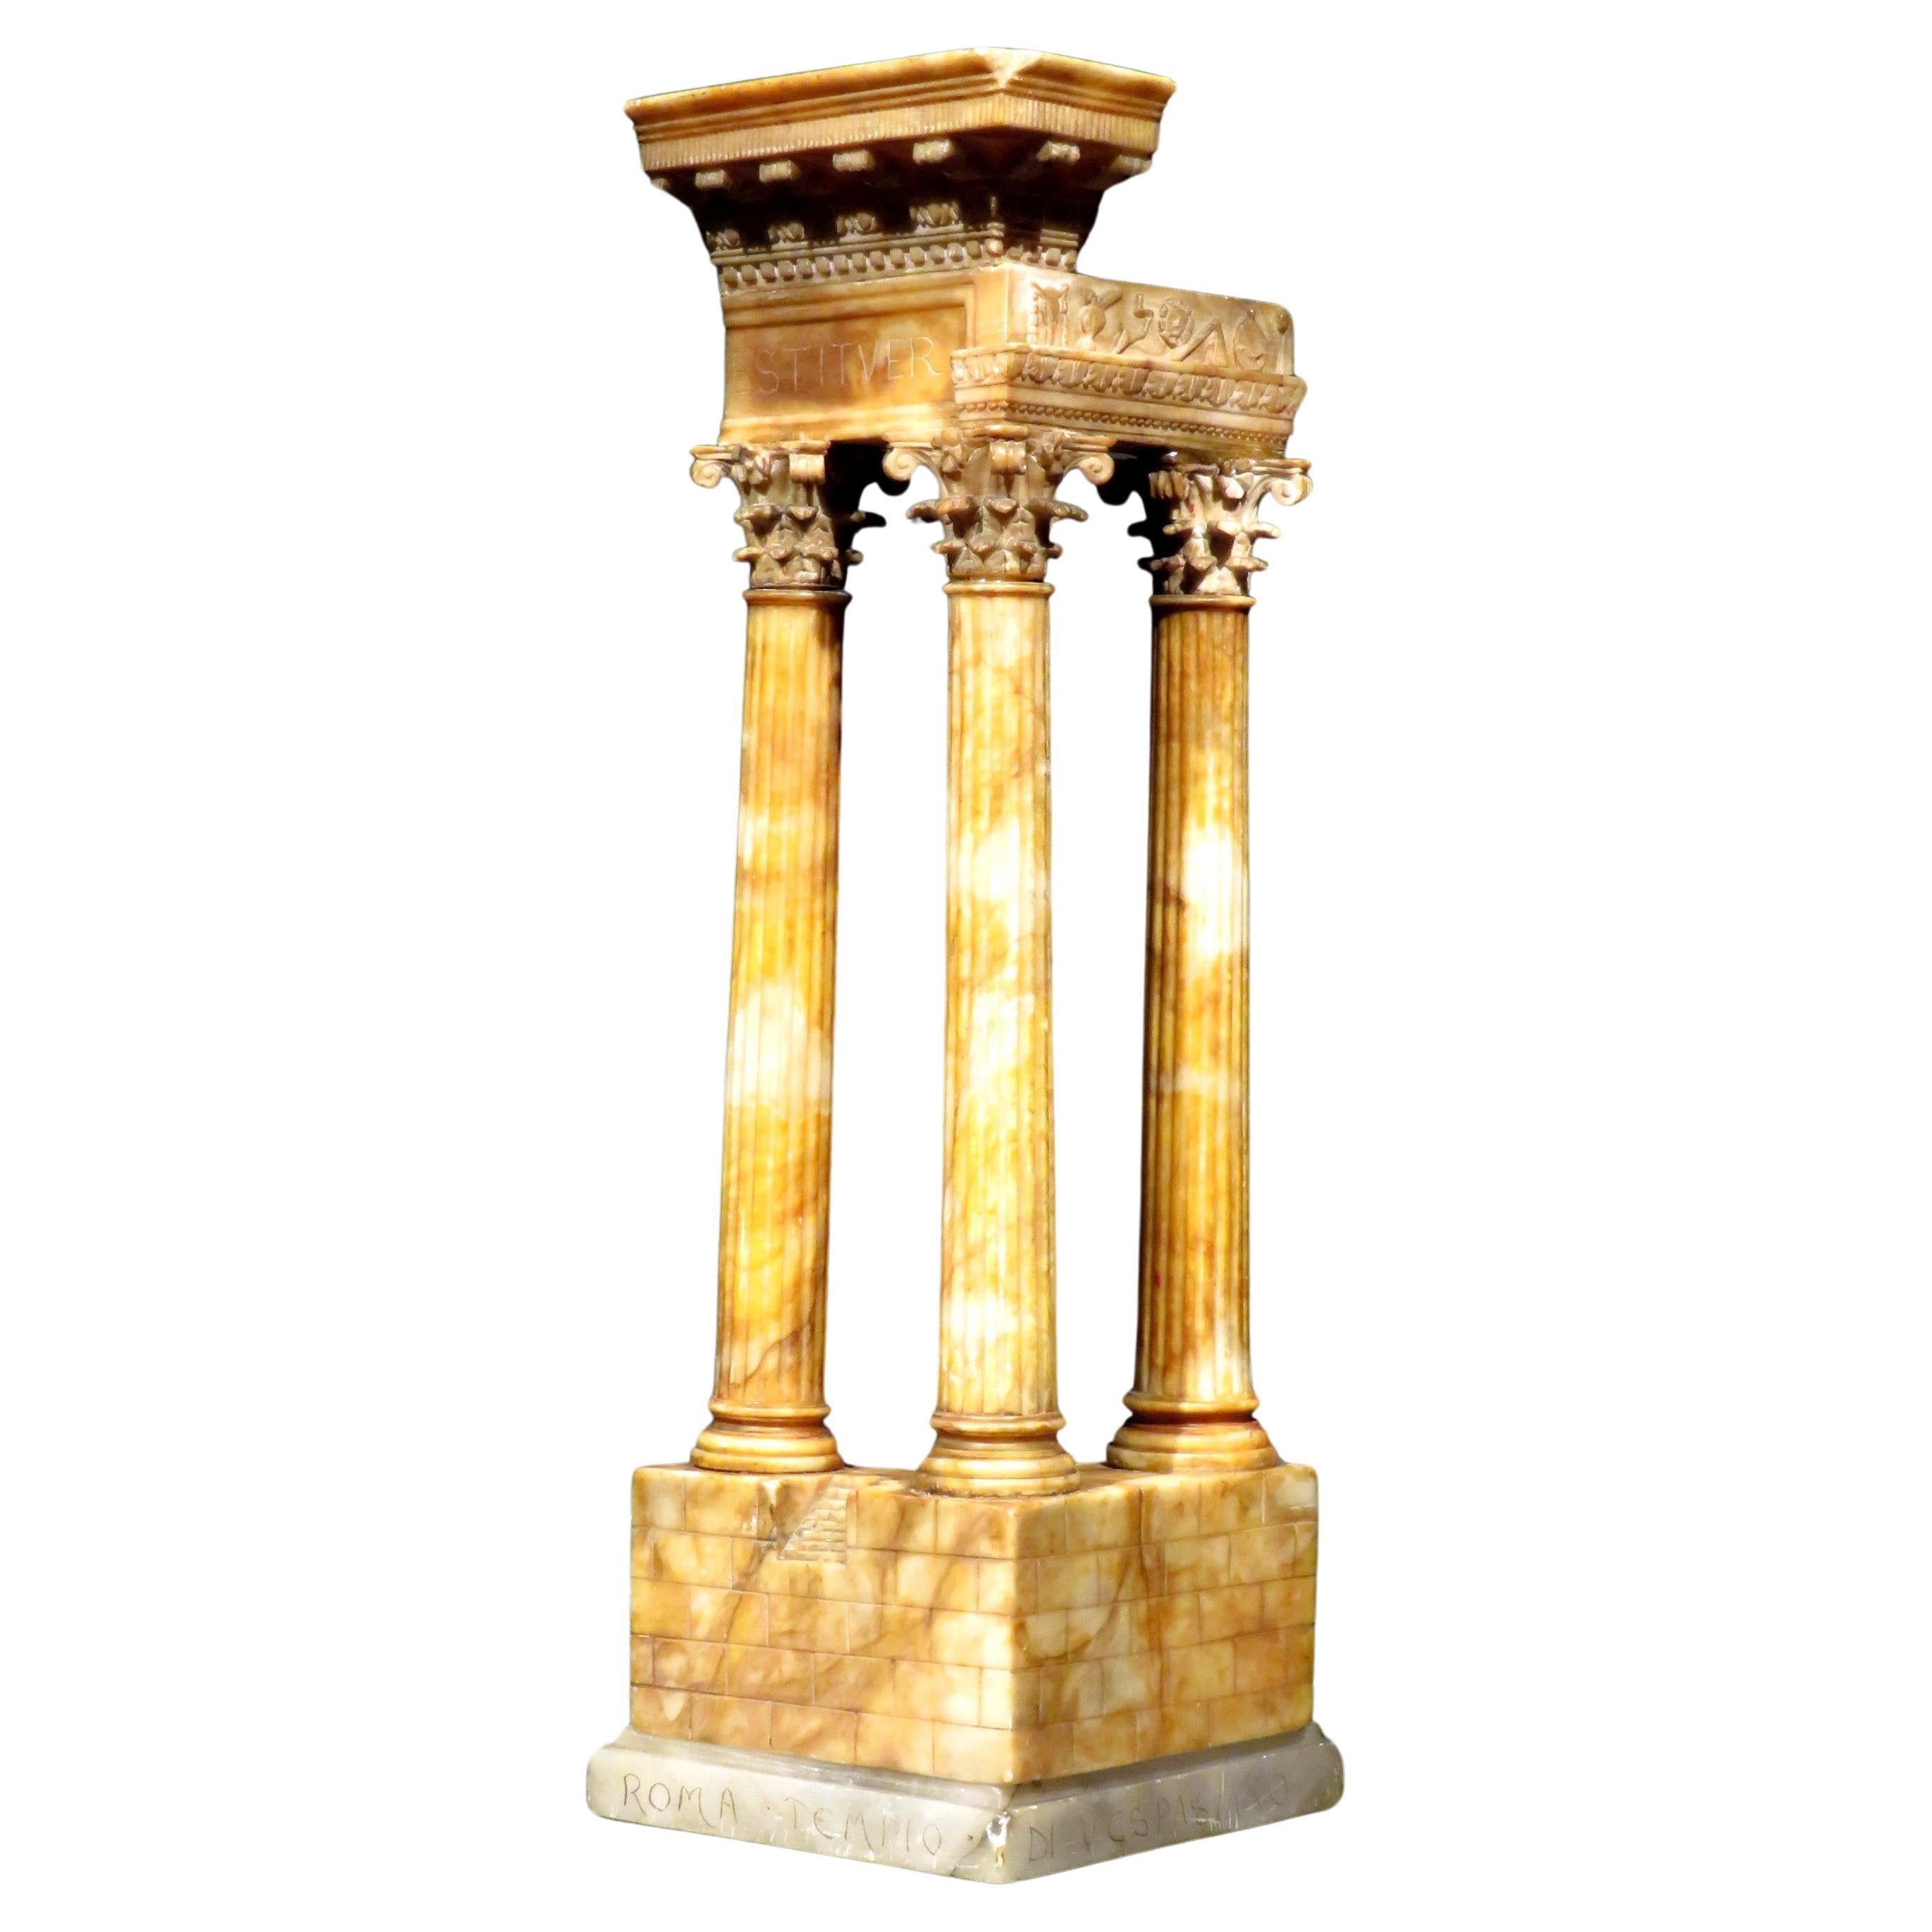 Fein geformtes Modell des Tempels des Vespasian im Grand Tour-Stil des Vespasian, um 1900